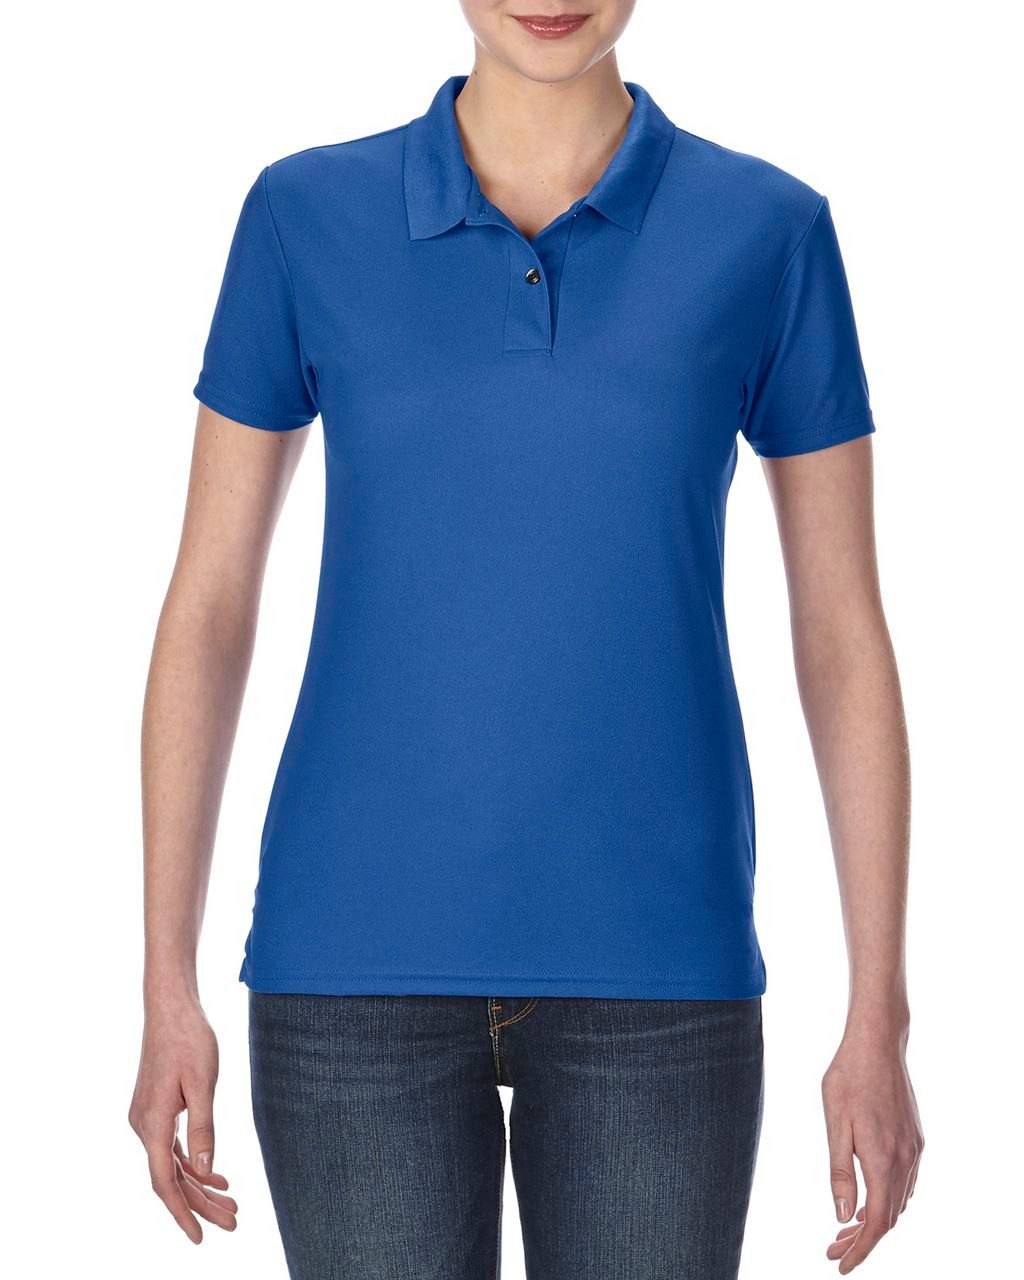 Gildan Trainingsshirt Gildan Damen Sport Polo Shirt Poloshirt Kurzarm Basic T-Shirt Basic